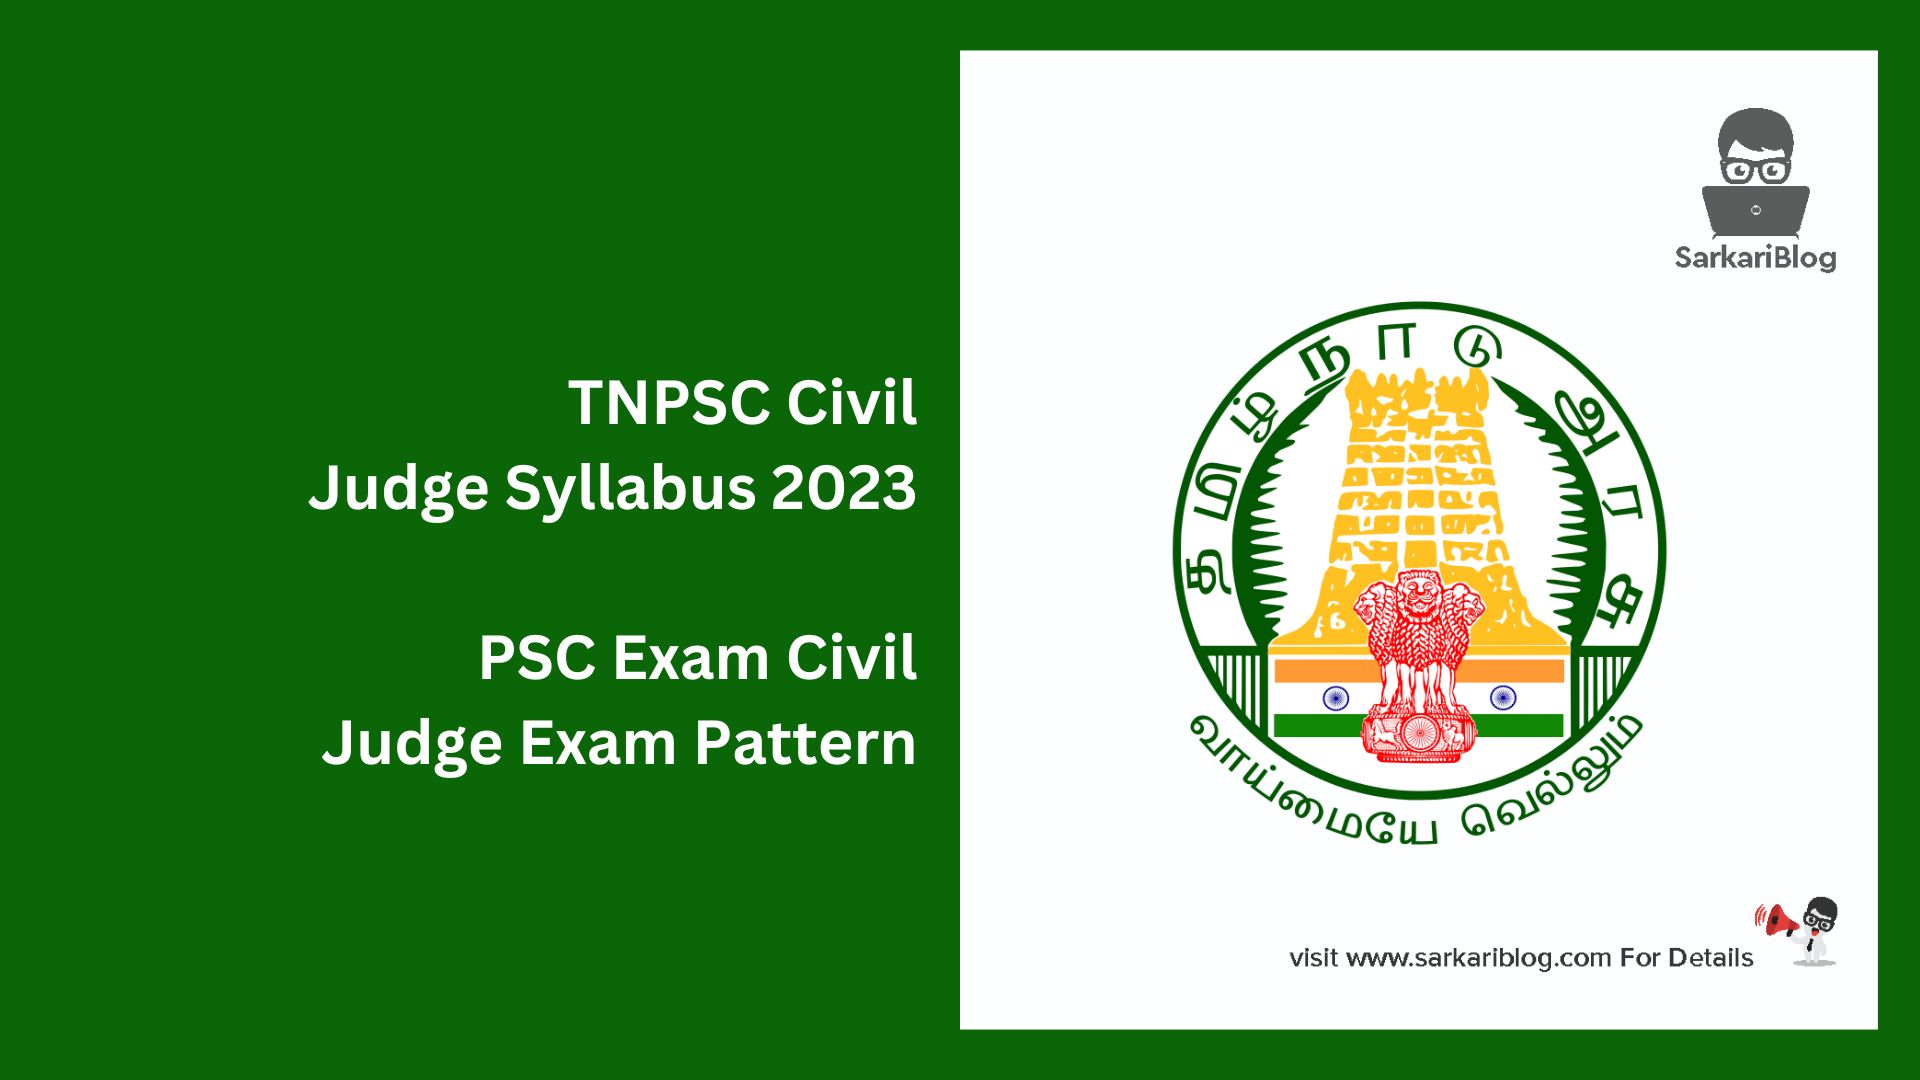 TNPSC Civil Judge Syllabus 2023